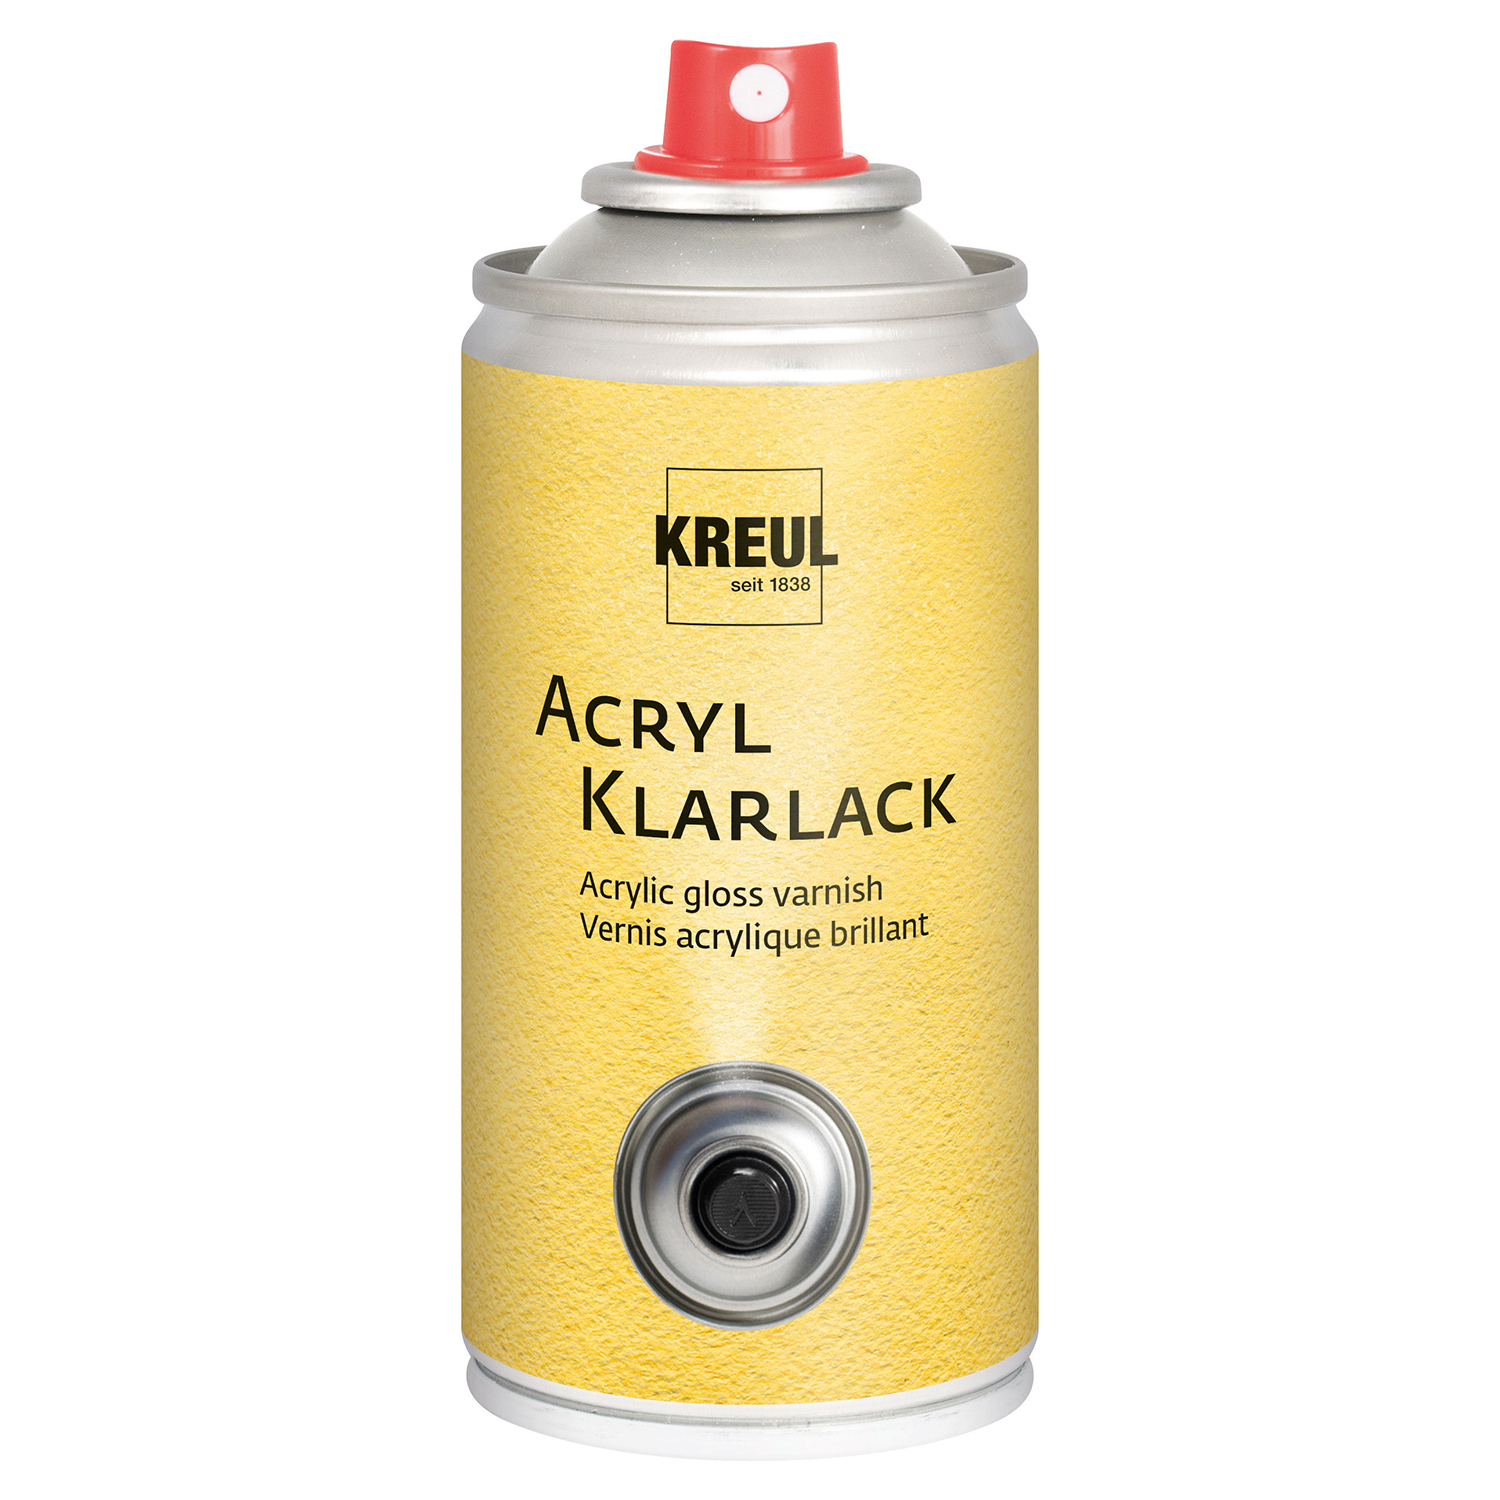 NEU Kreul Acryl Klarlack, 150 ml Sprhdose